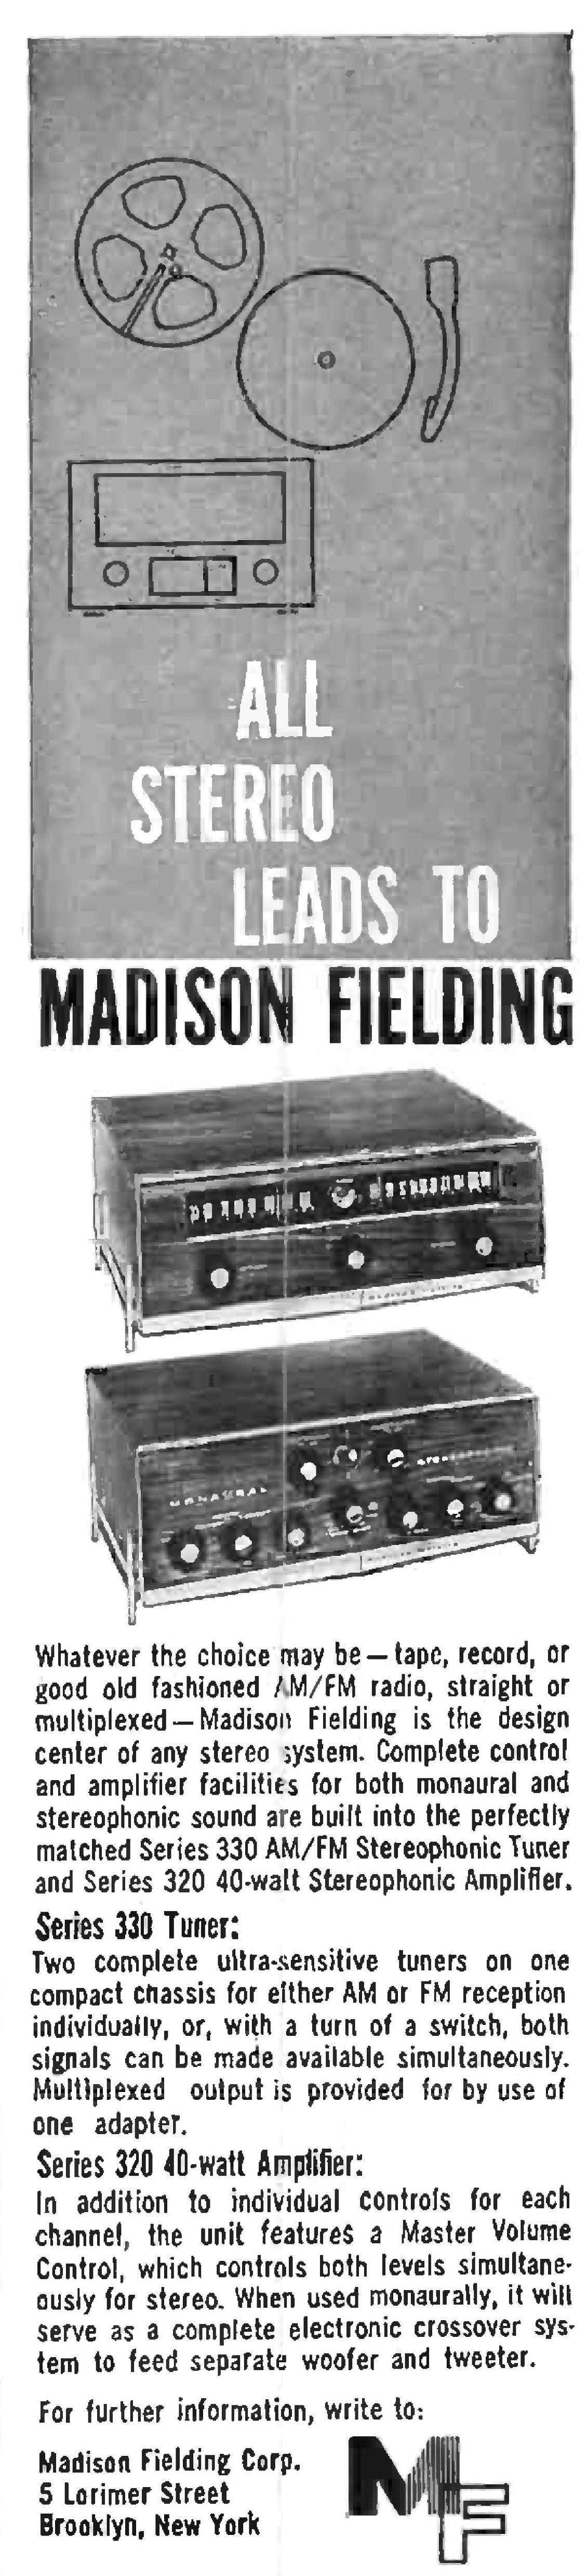 Madison 1958 0.jpg